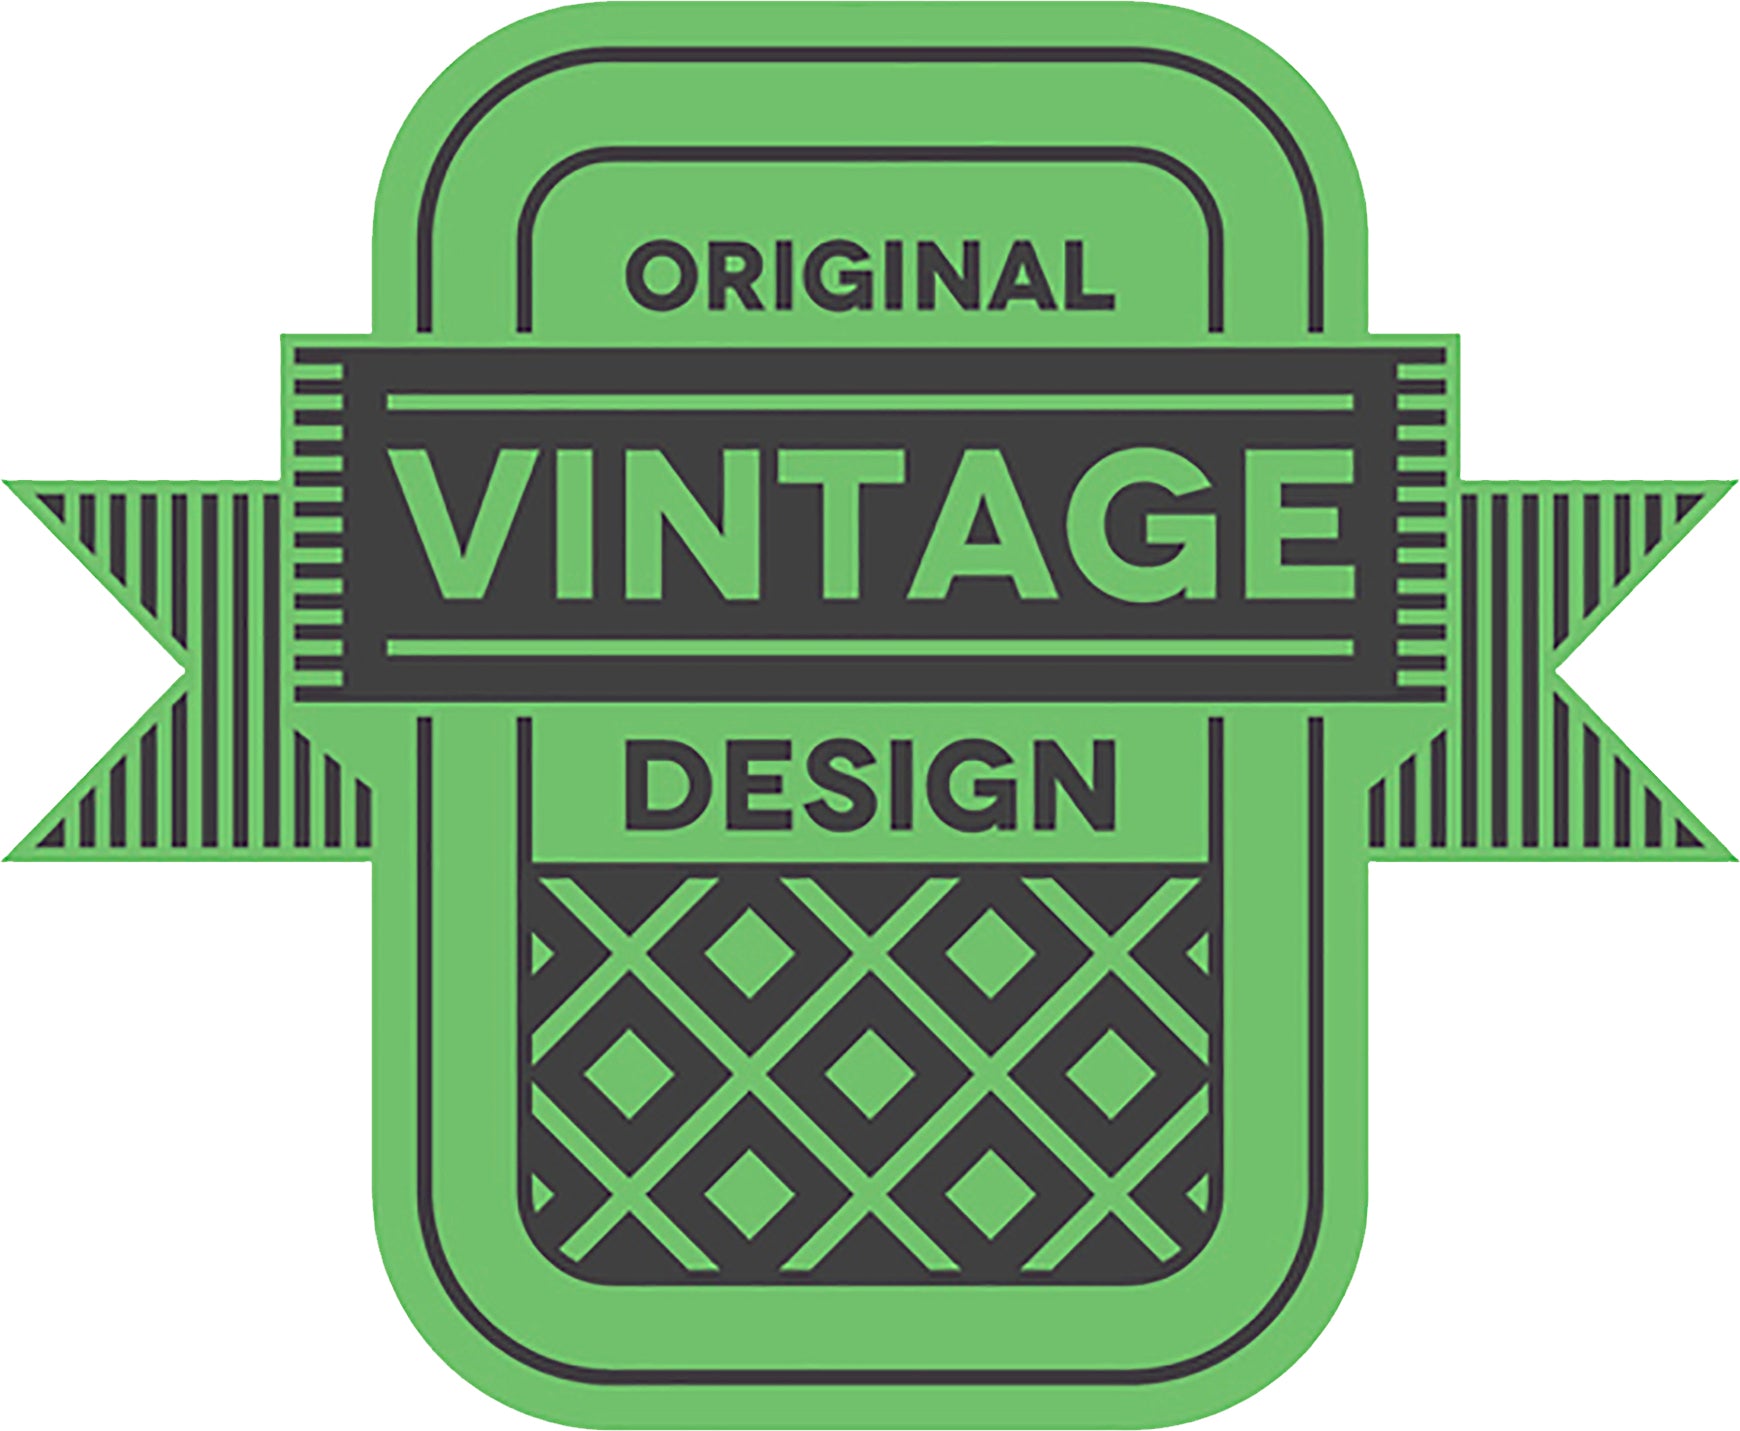 Cool Vintage Neon Premium High Quality Product Icon Logo #2 Vinyl Decal Sticker